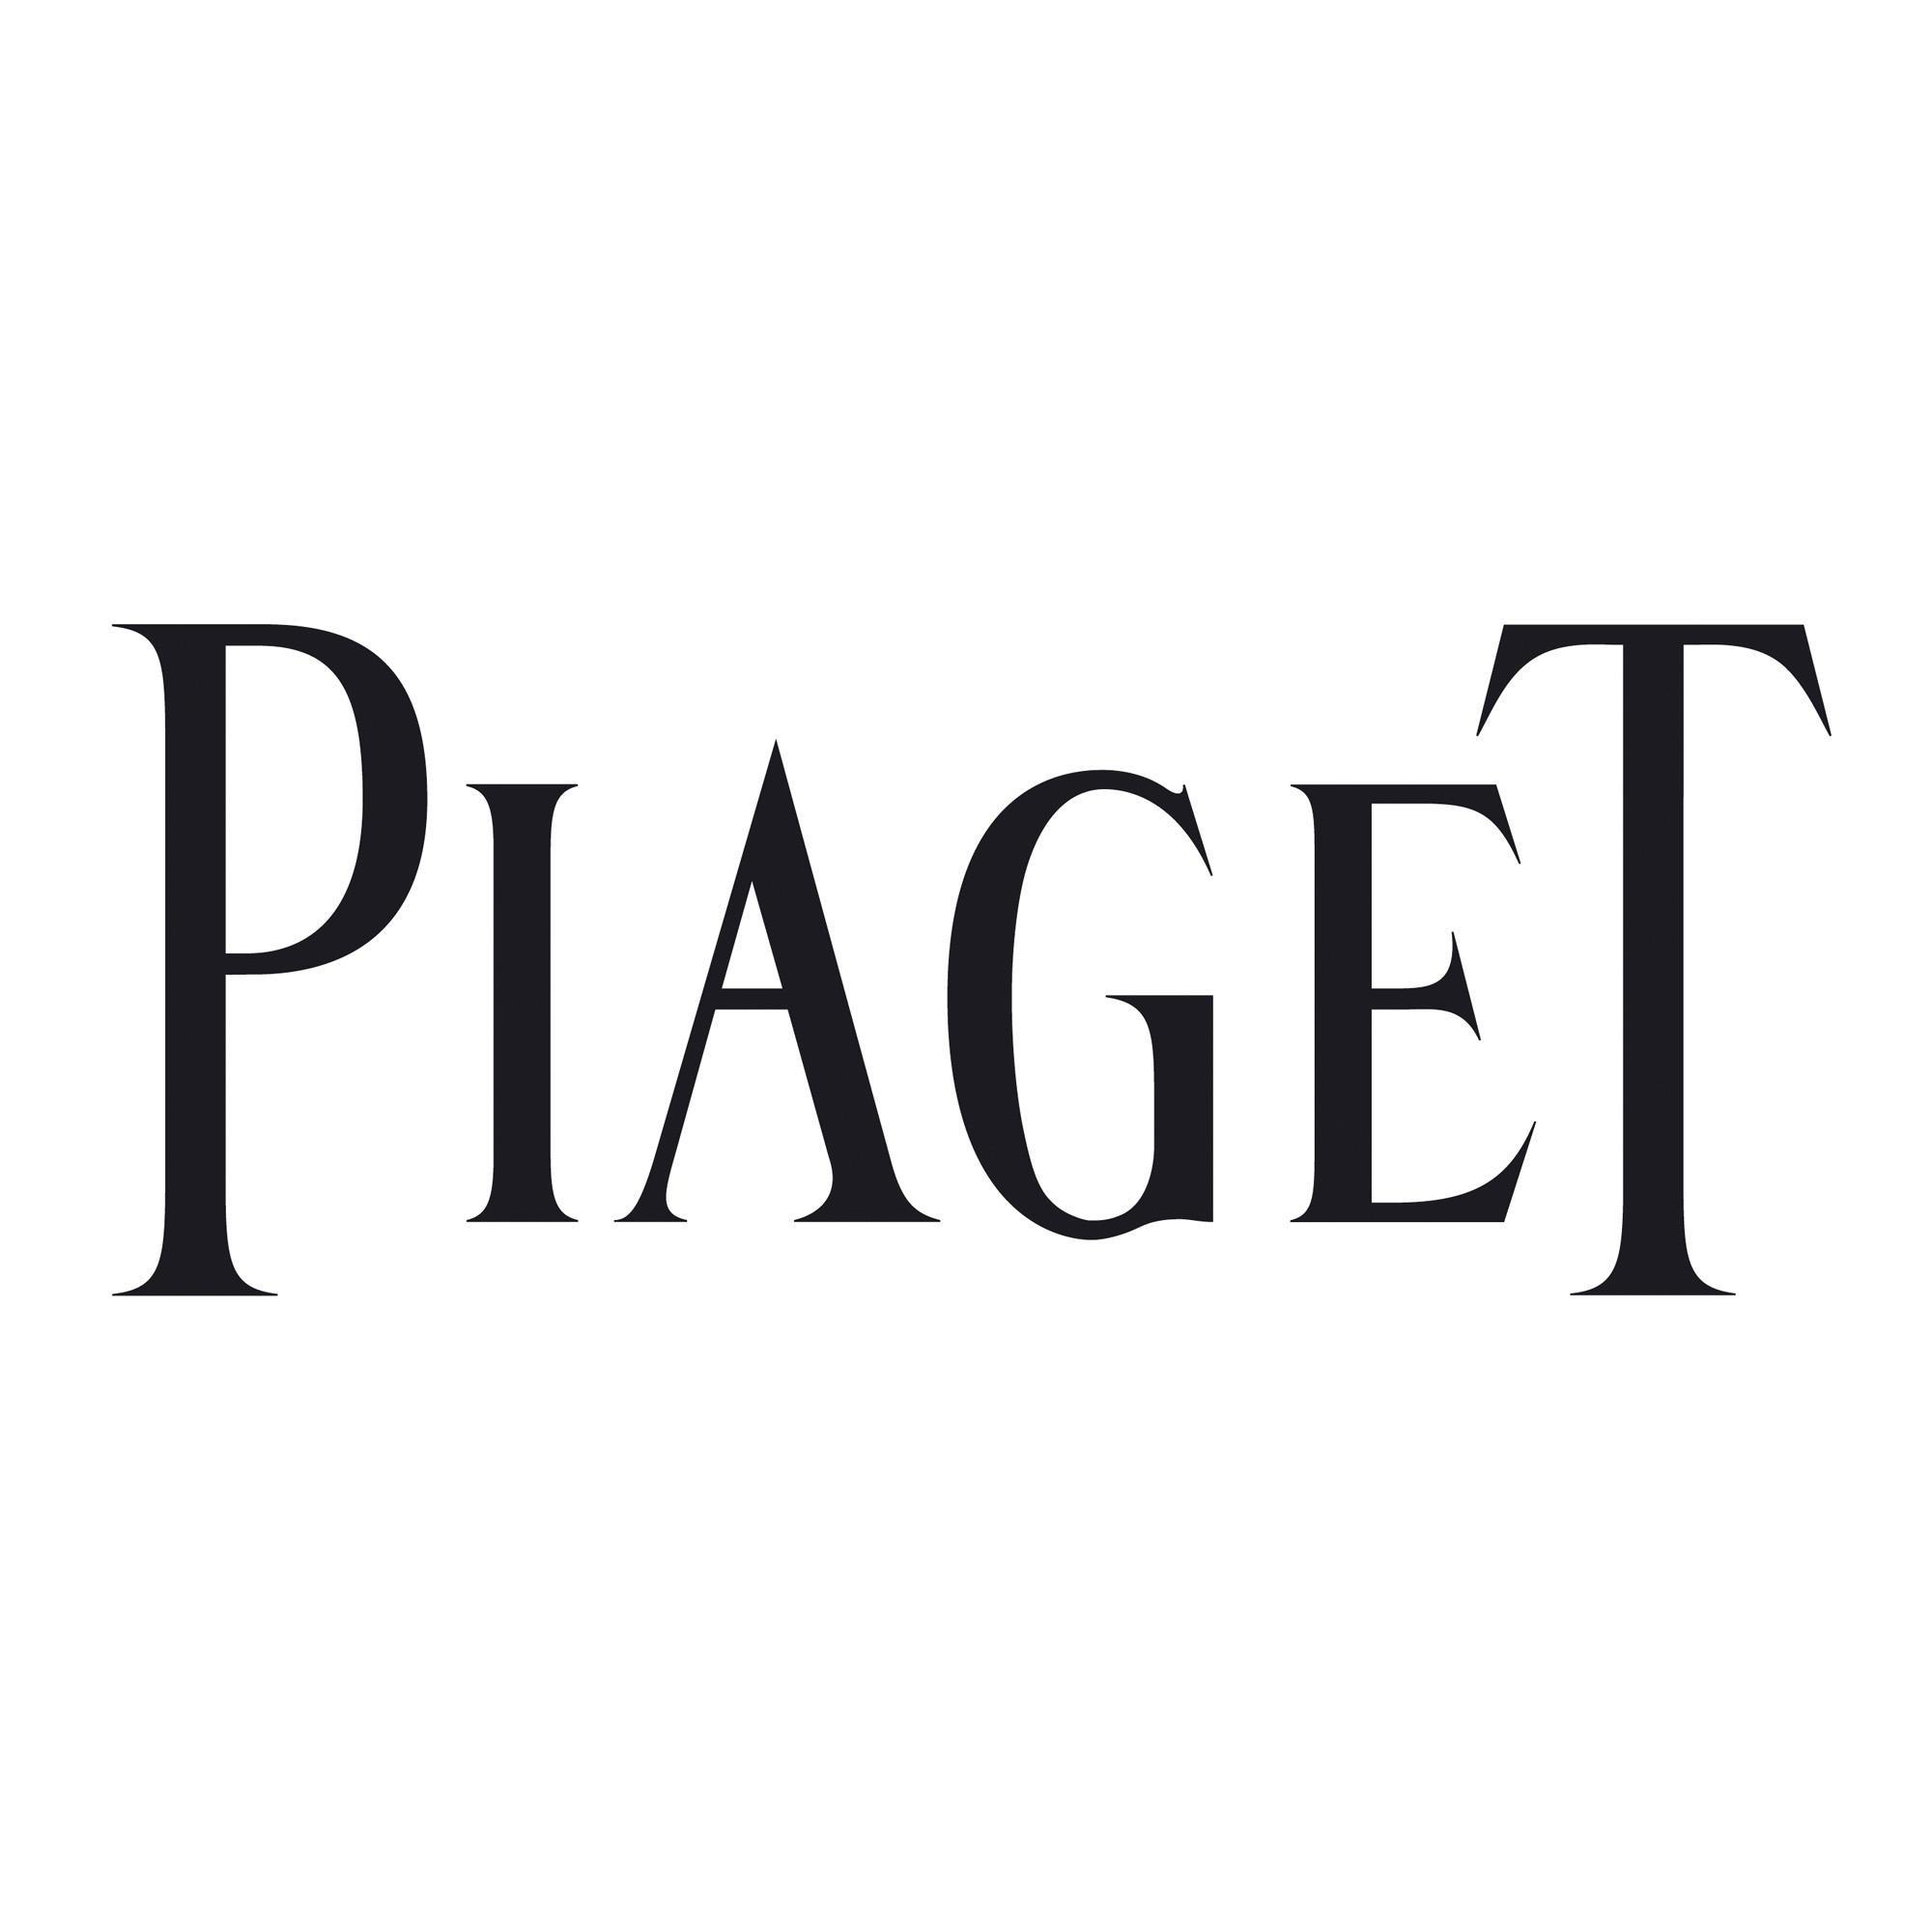 Piaget Boutique Sydney - King Street - Sydney, NSW 2000 - (02) 7233 1316 | ShowMeLocal.com